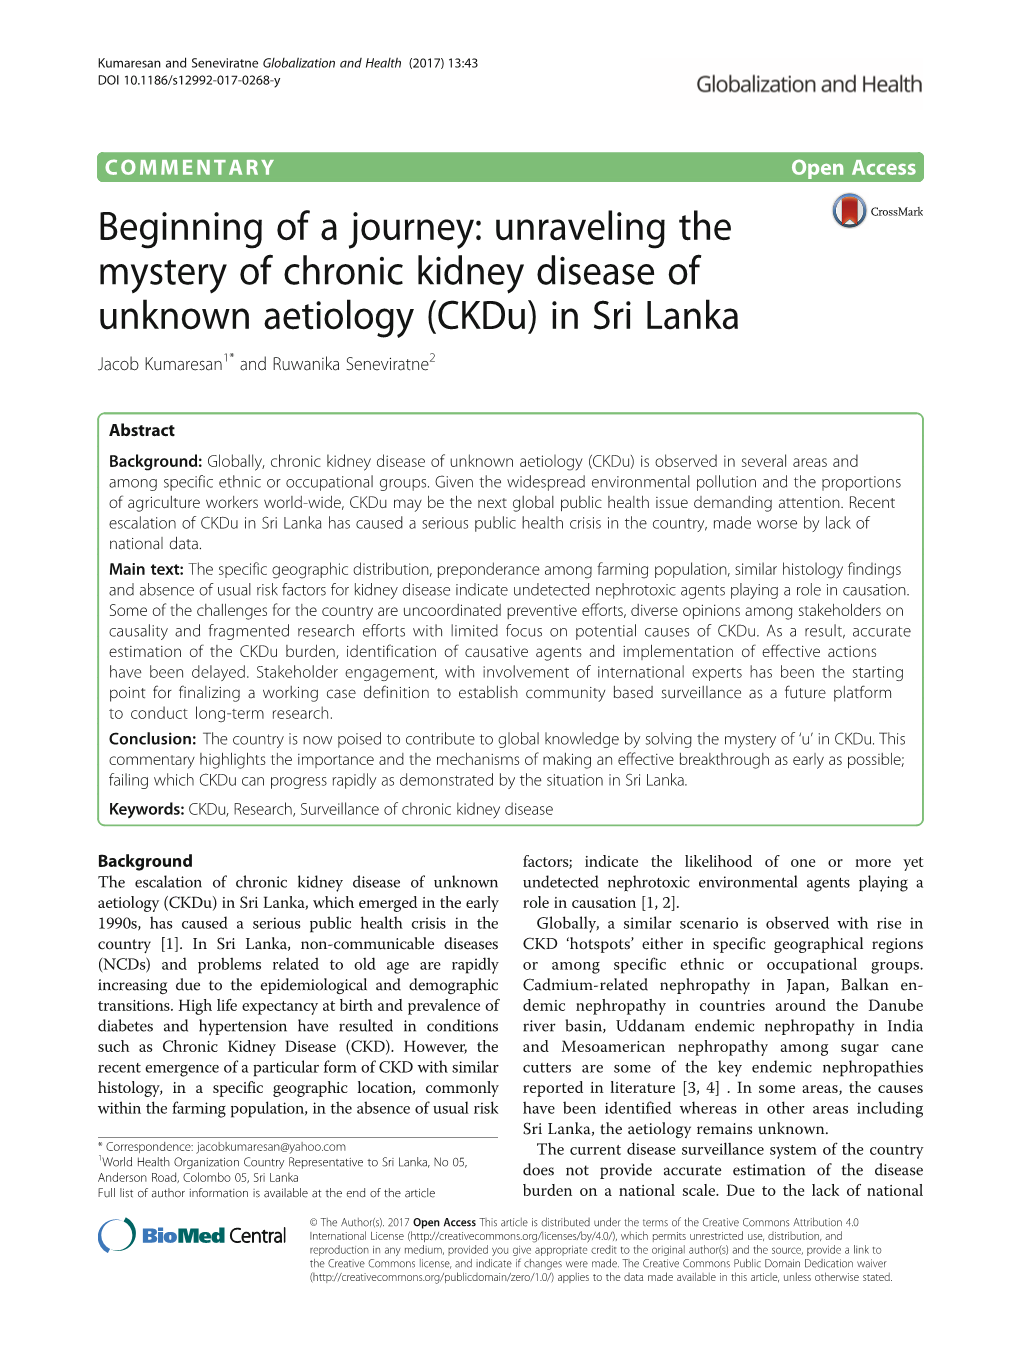 Beginning of a Journey: Unraveling the Mystery of Chronic Kidney Disease of Unknown Aetiology (Ckdu) in Sri Lanka Jacob Kumaresan1* and Ruwanika Seneviratne2